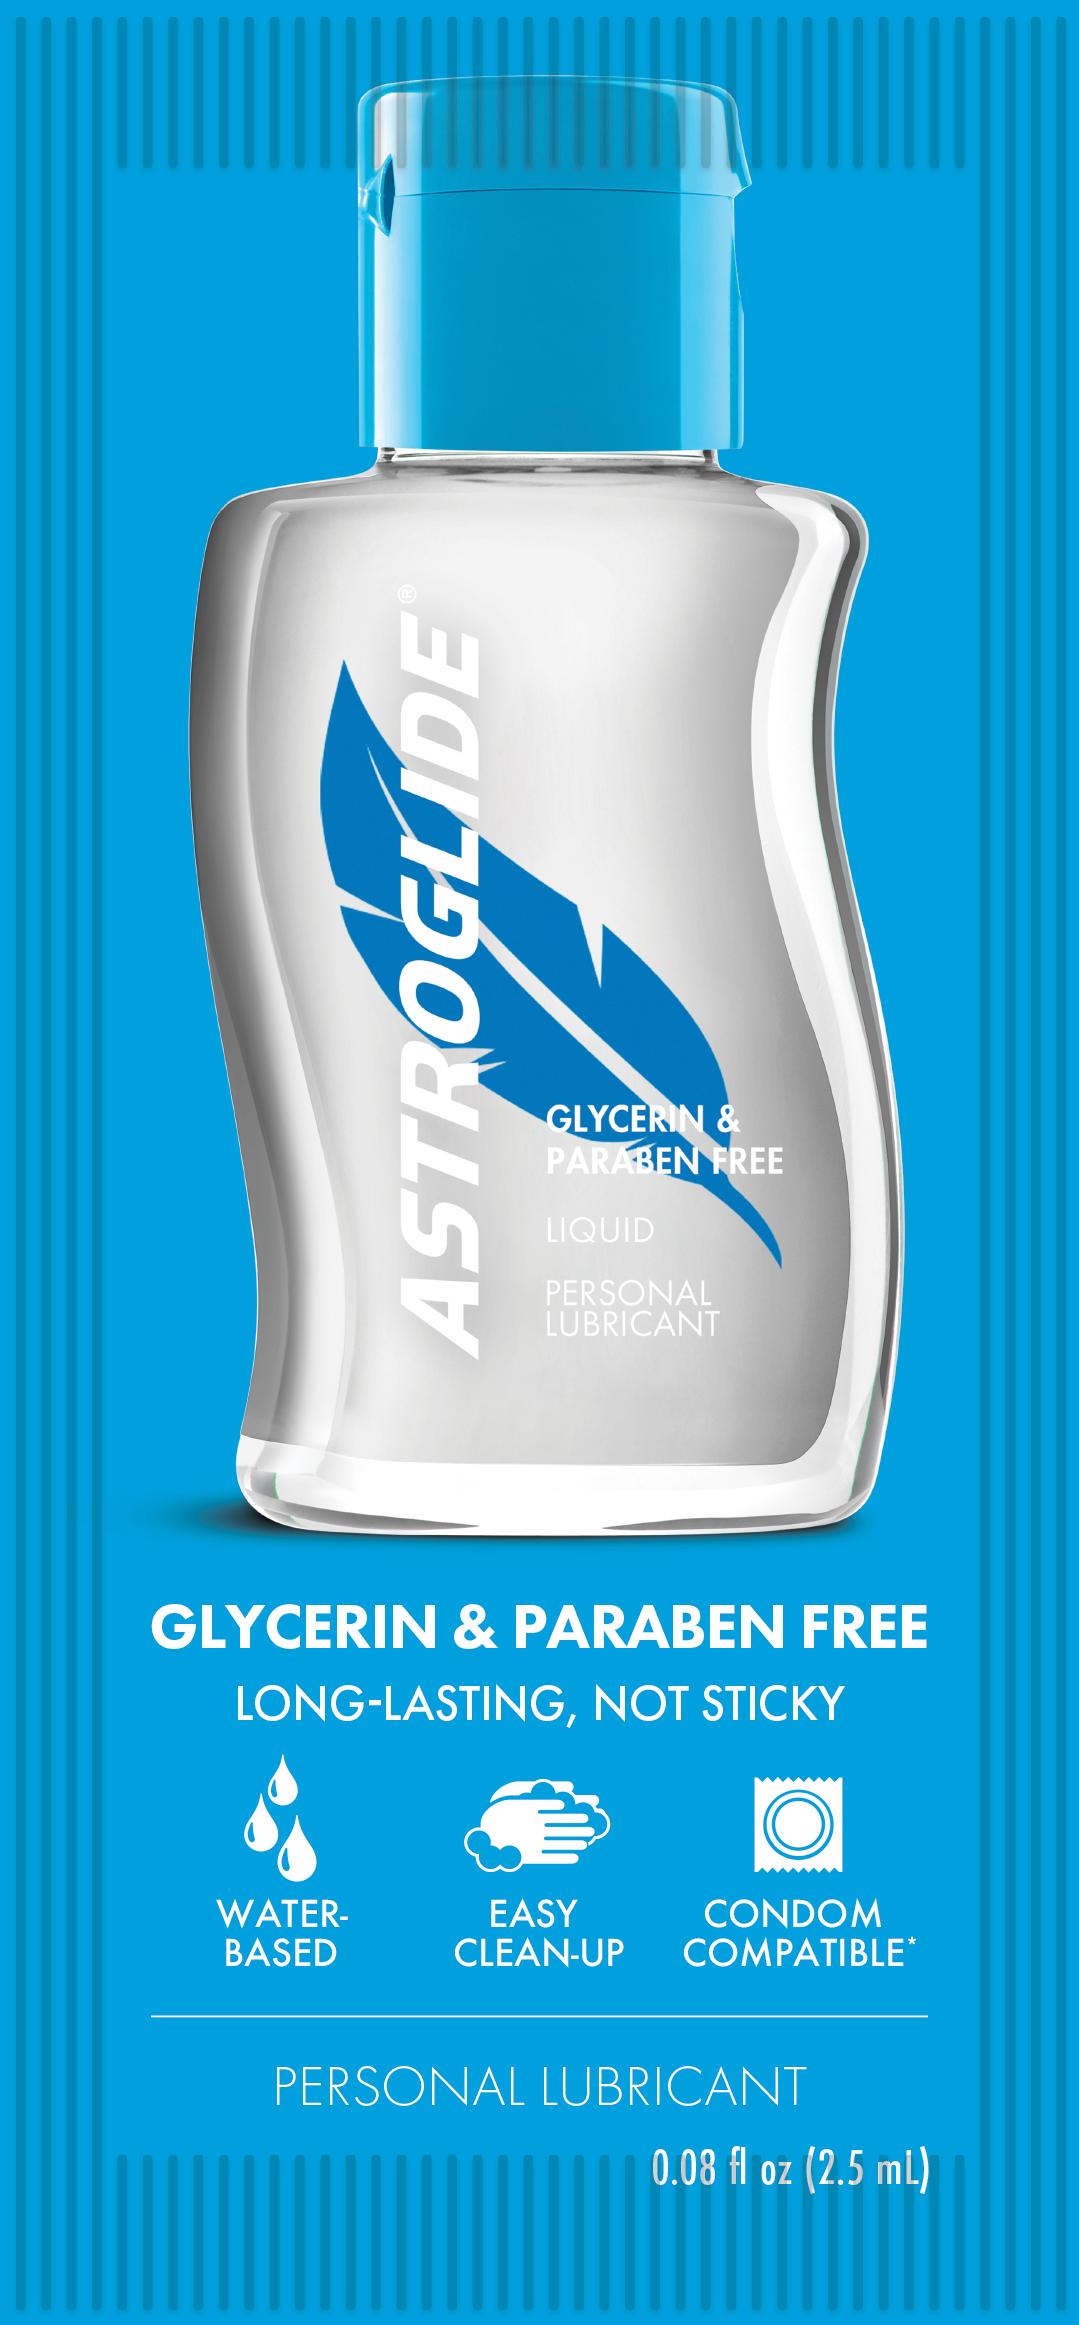 Astroglide Glycerin & Paraben Free Personal Lubricant Sachet 2.5ml